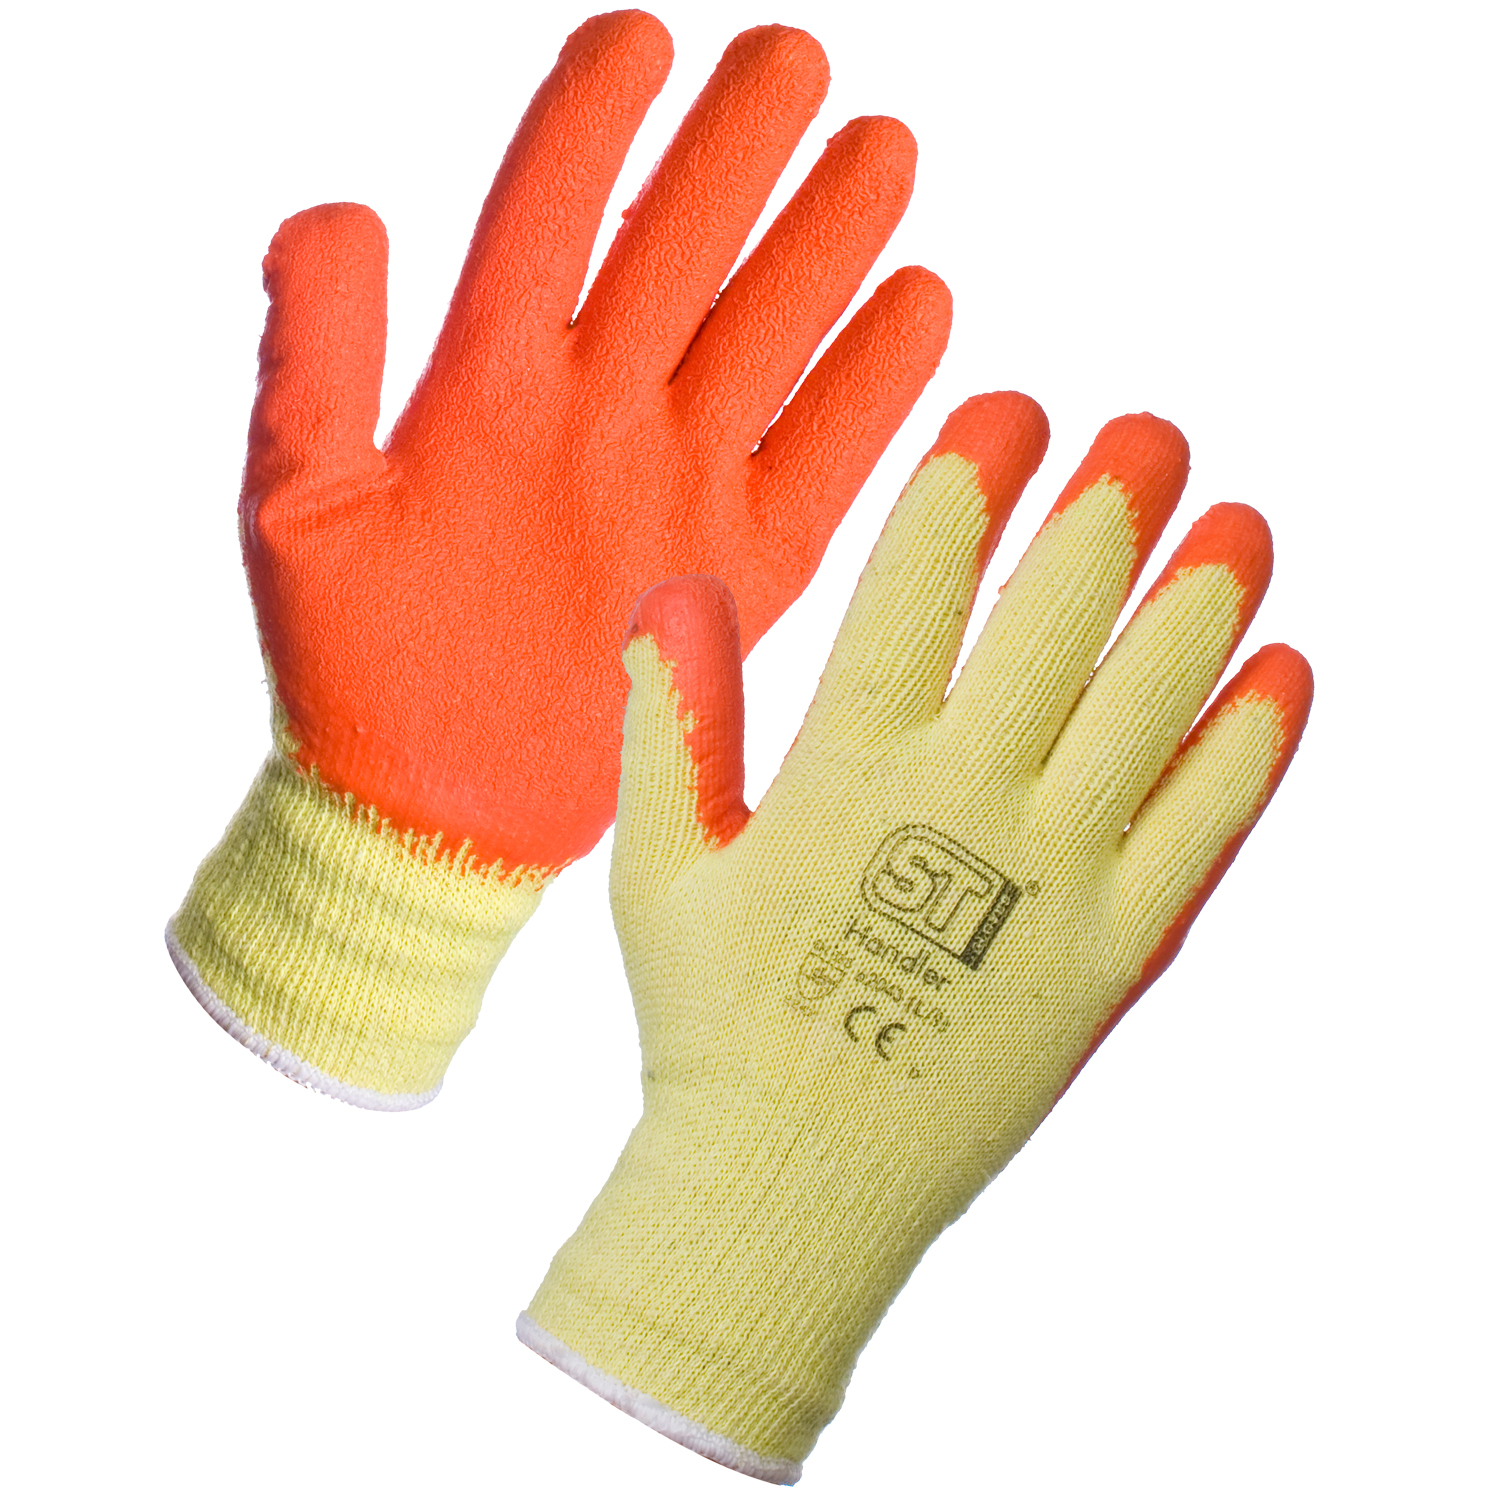 Handler Glove Orange Latex Palm Coat - Size 7